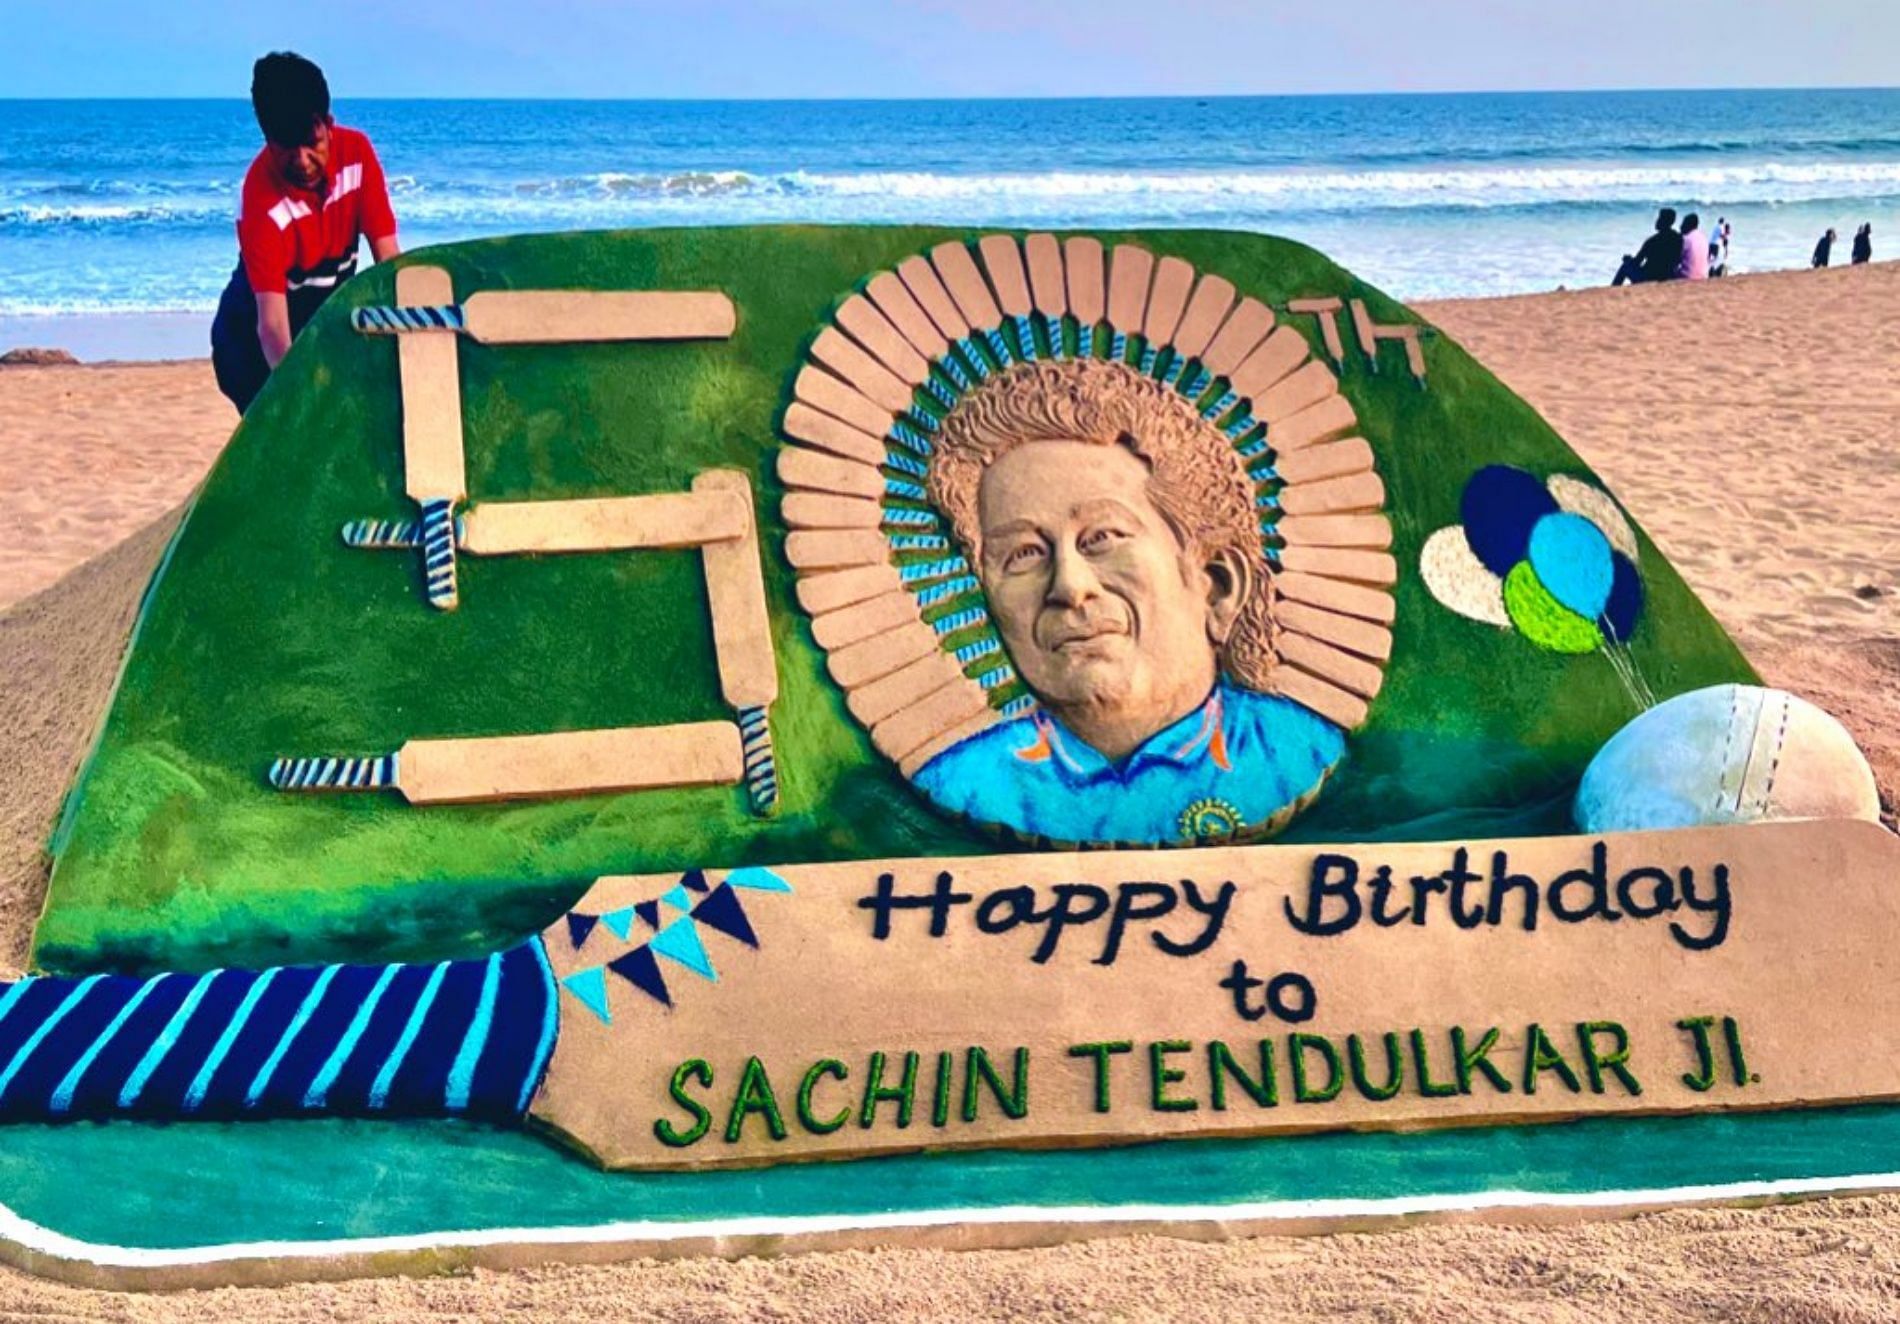 Sachin Tendulkar 50th birthday